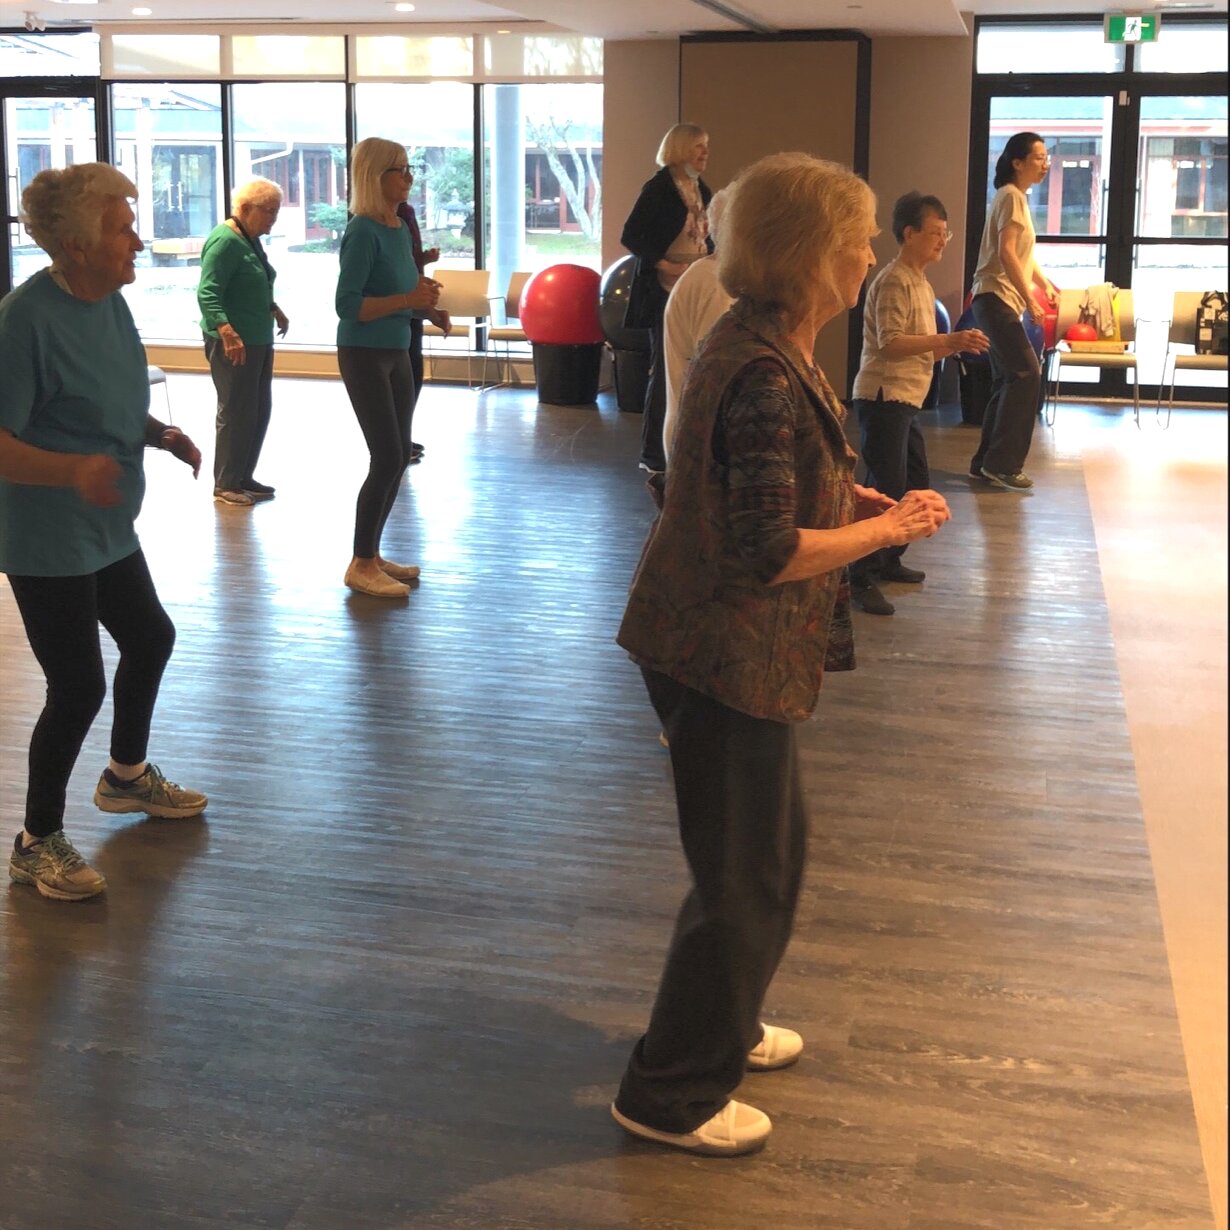 easy balance exercises for seniors, group dancing